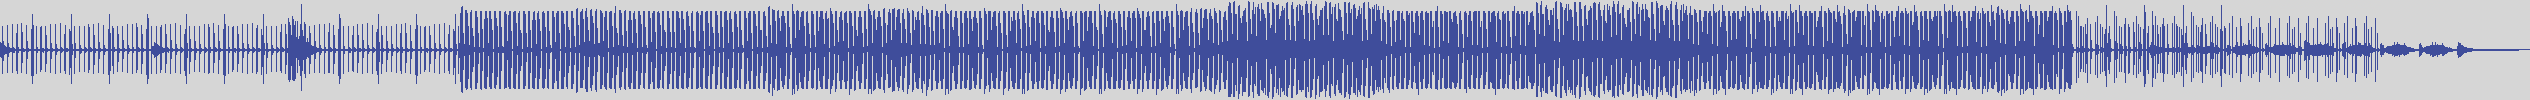 nf_boyz_records [NFY056] Simple Best - Stellar [Original Mix] audio wave form